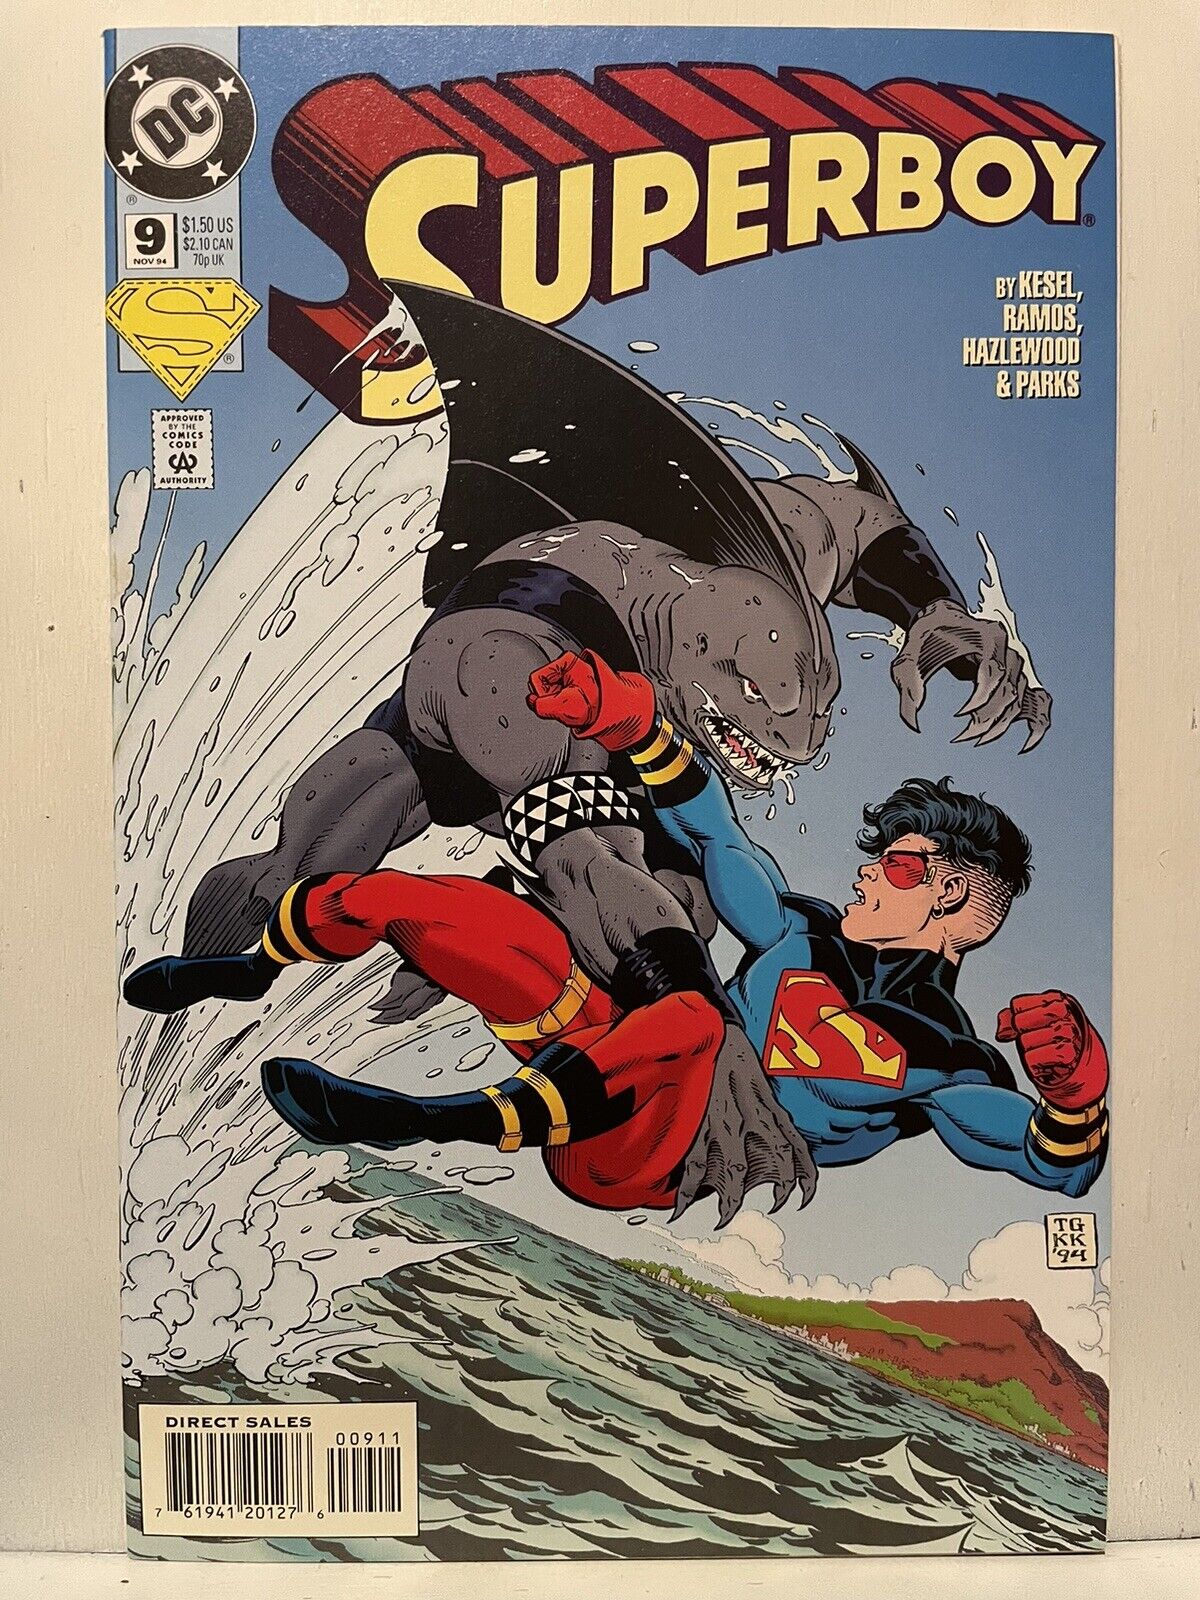 Superboy #9 * 1994 DC * First Appearance King Shark * NM? * (L40)